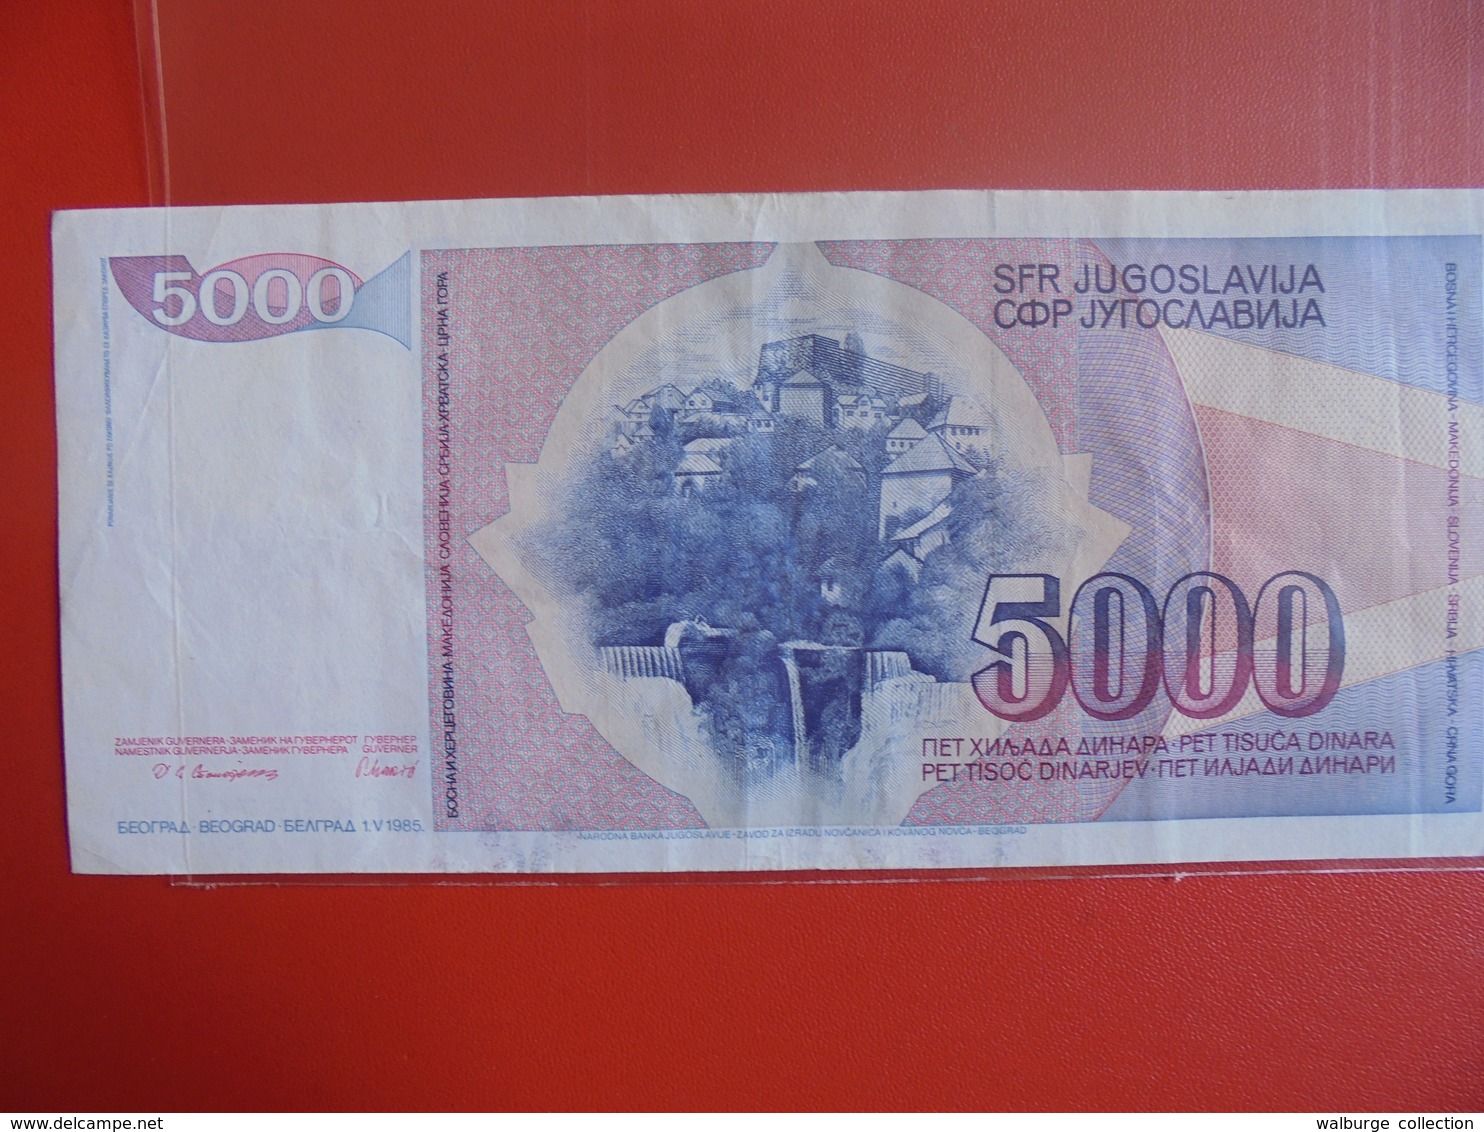 YOUGOSLAVIE 5000 DINARA 1985 CIRCULER - Yugoslavia